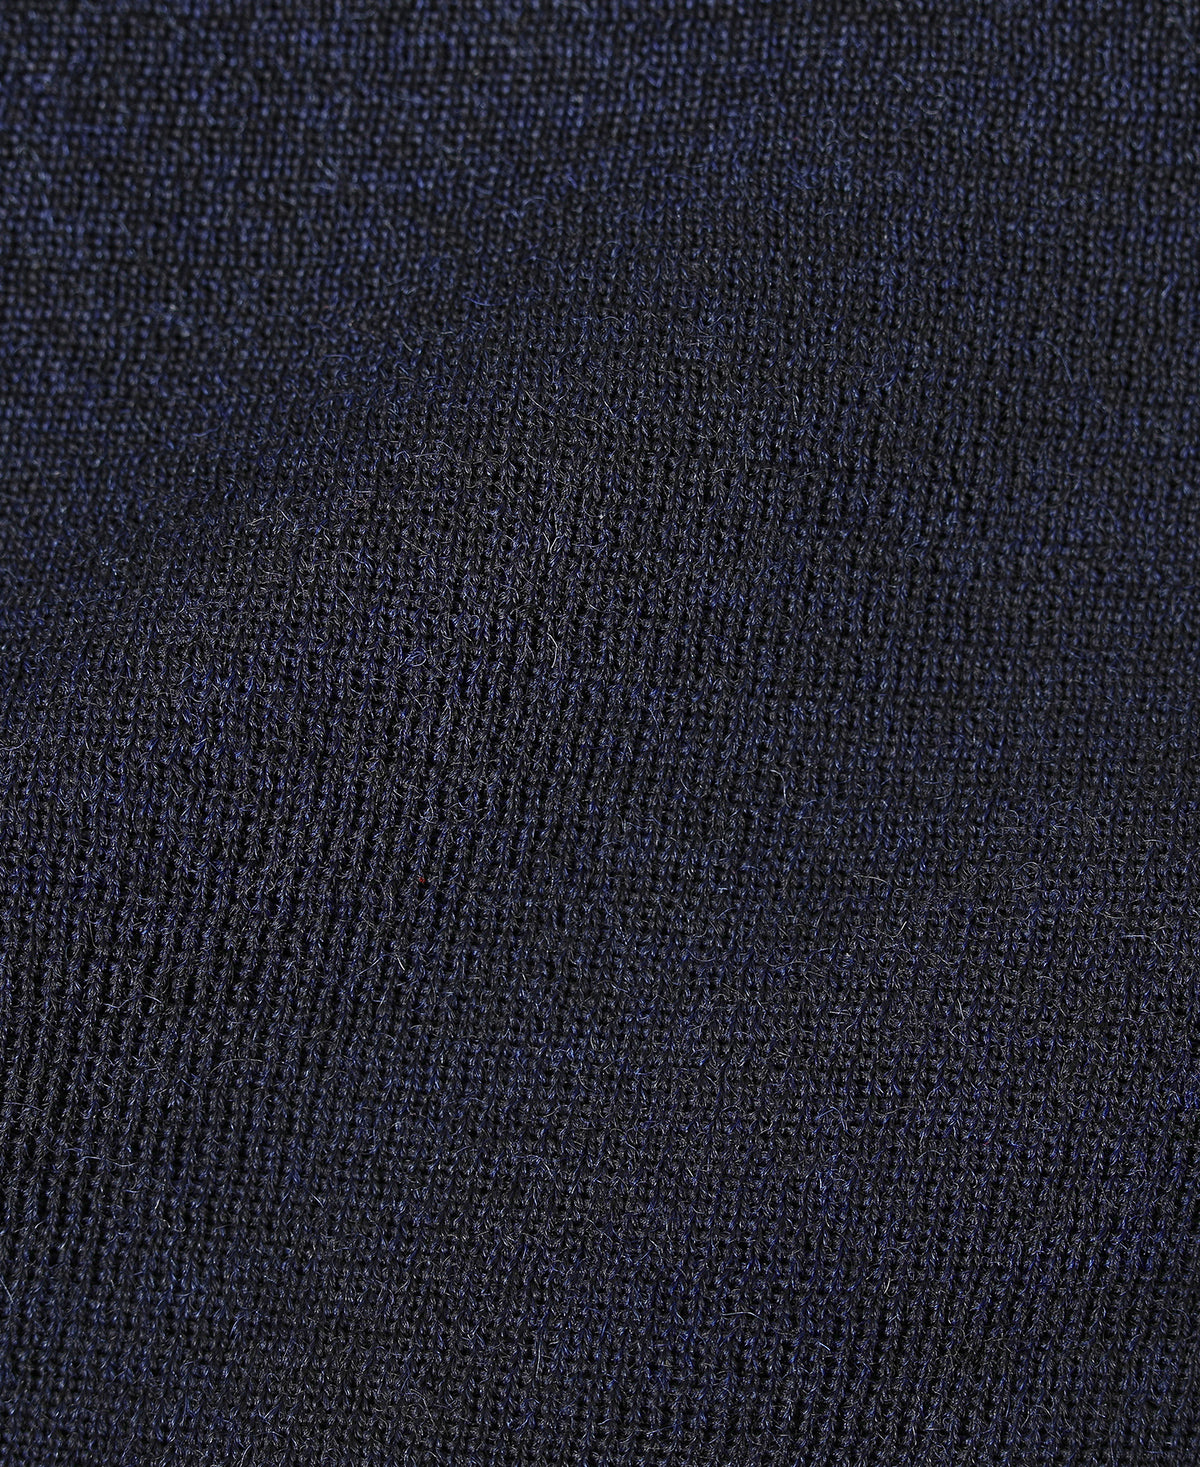 Lot 913 1940s Contrast Wool Cardigan - Navy/Gray